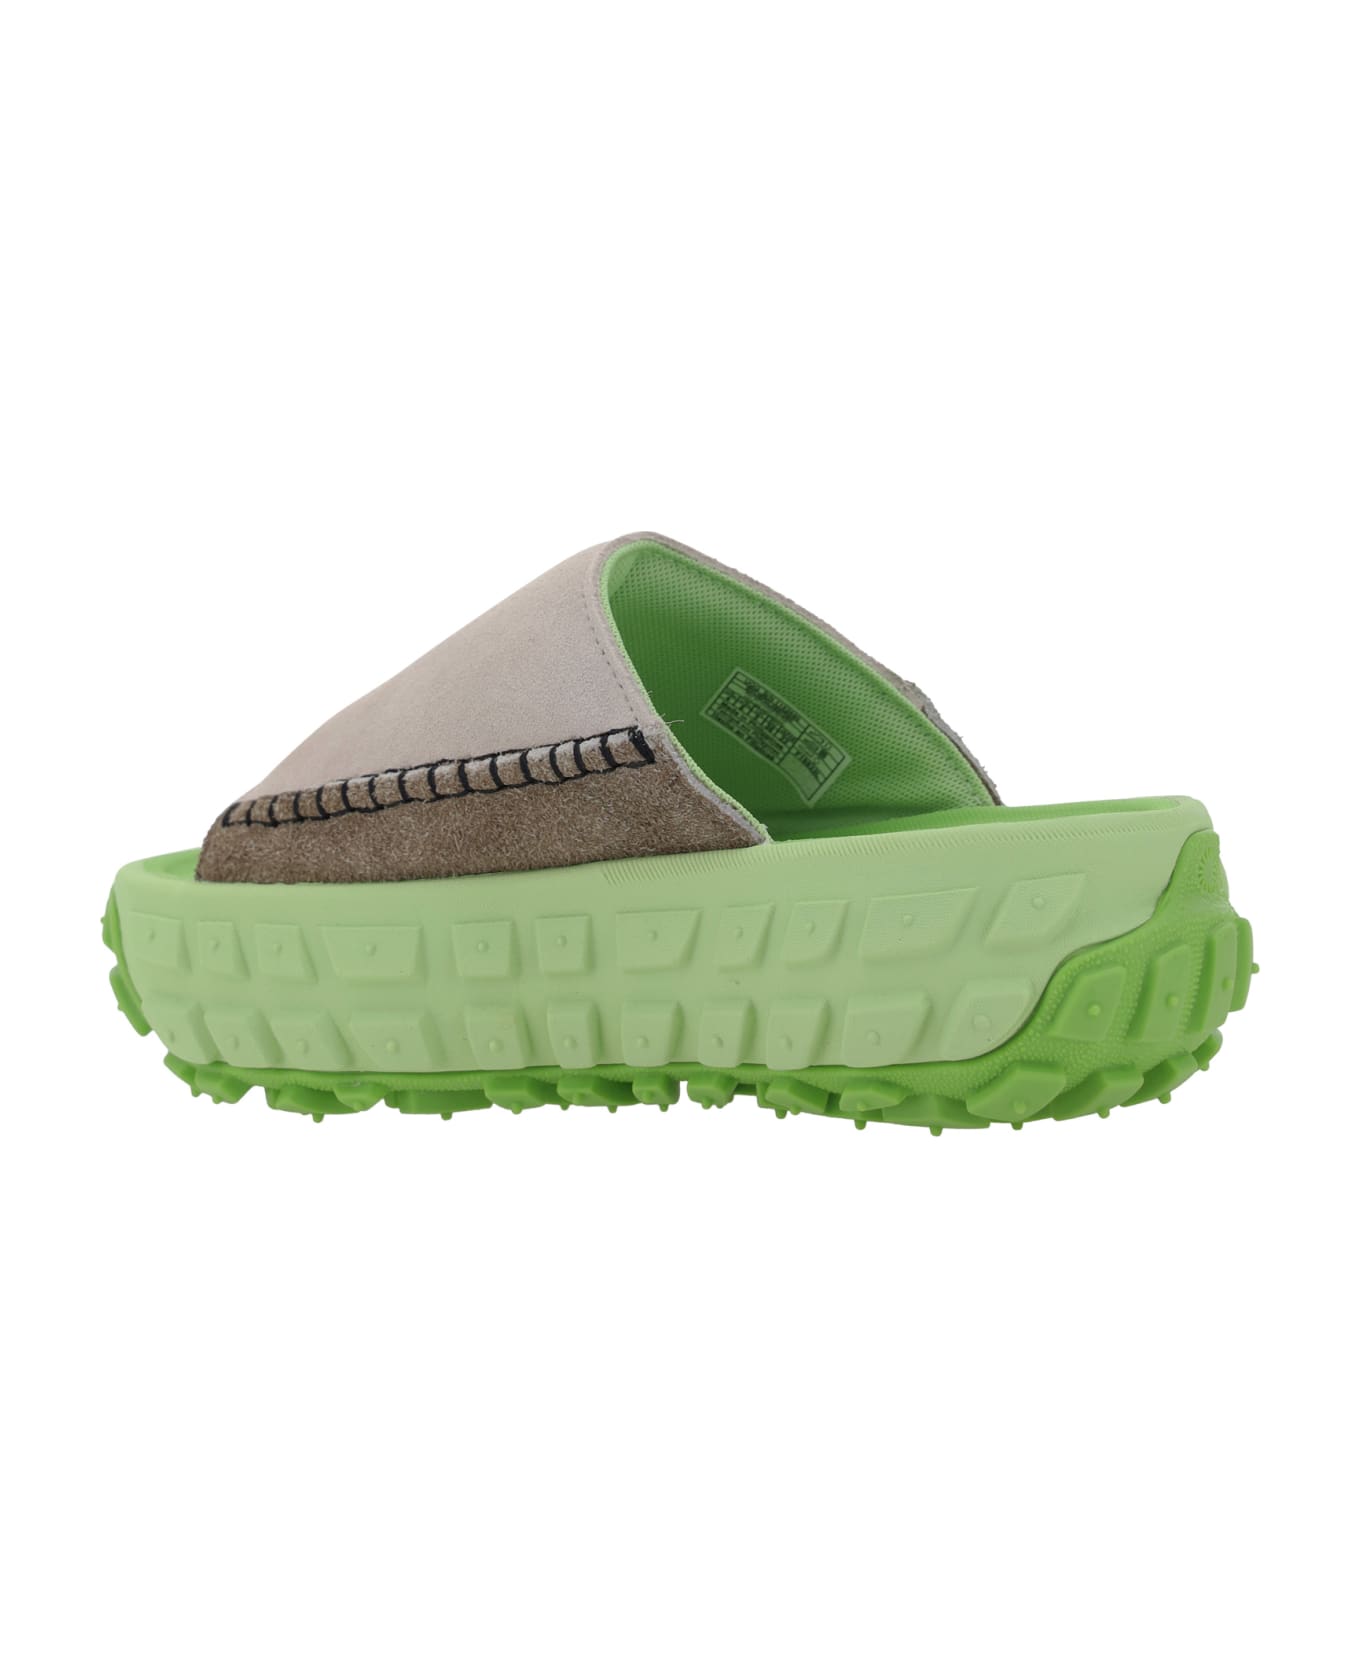 UGG Venture Daze Sandals - Cct Ceramic / Caterpillar その他各種シューズ